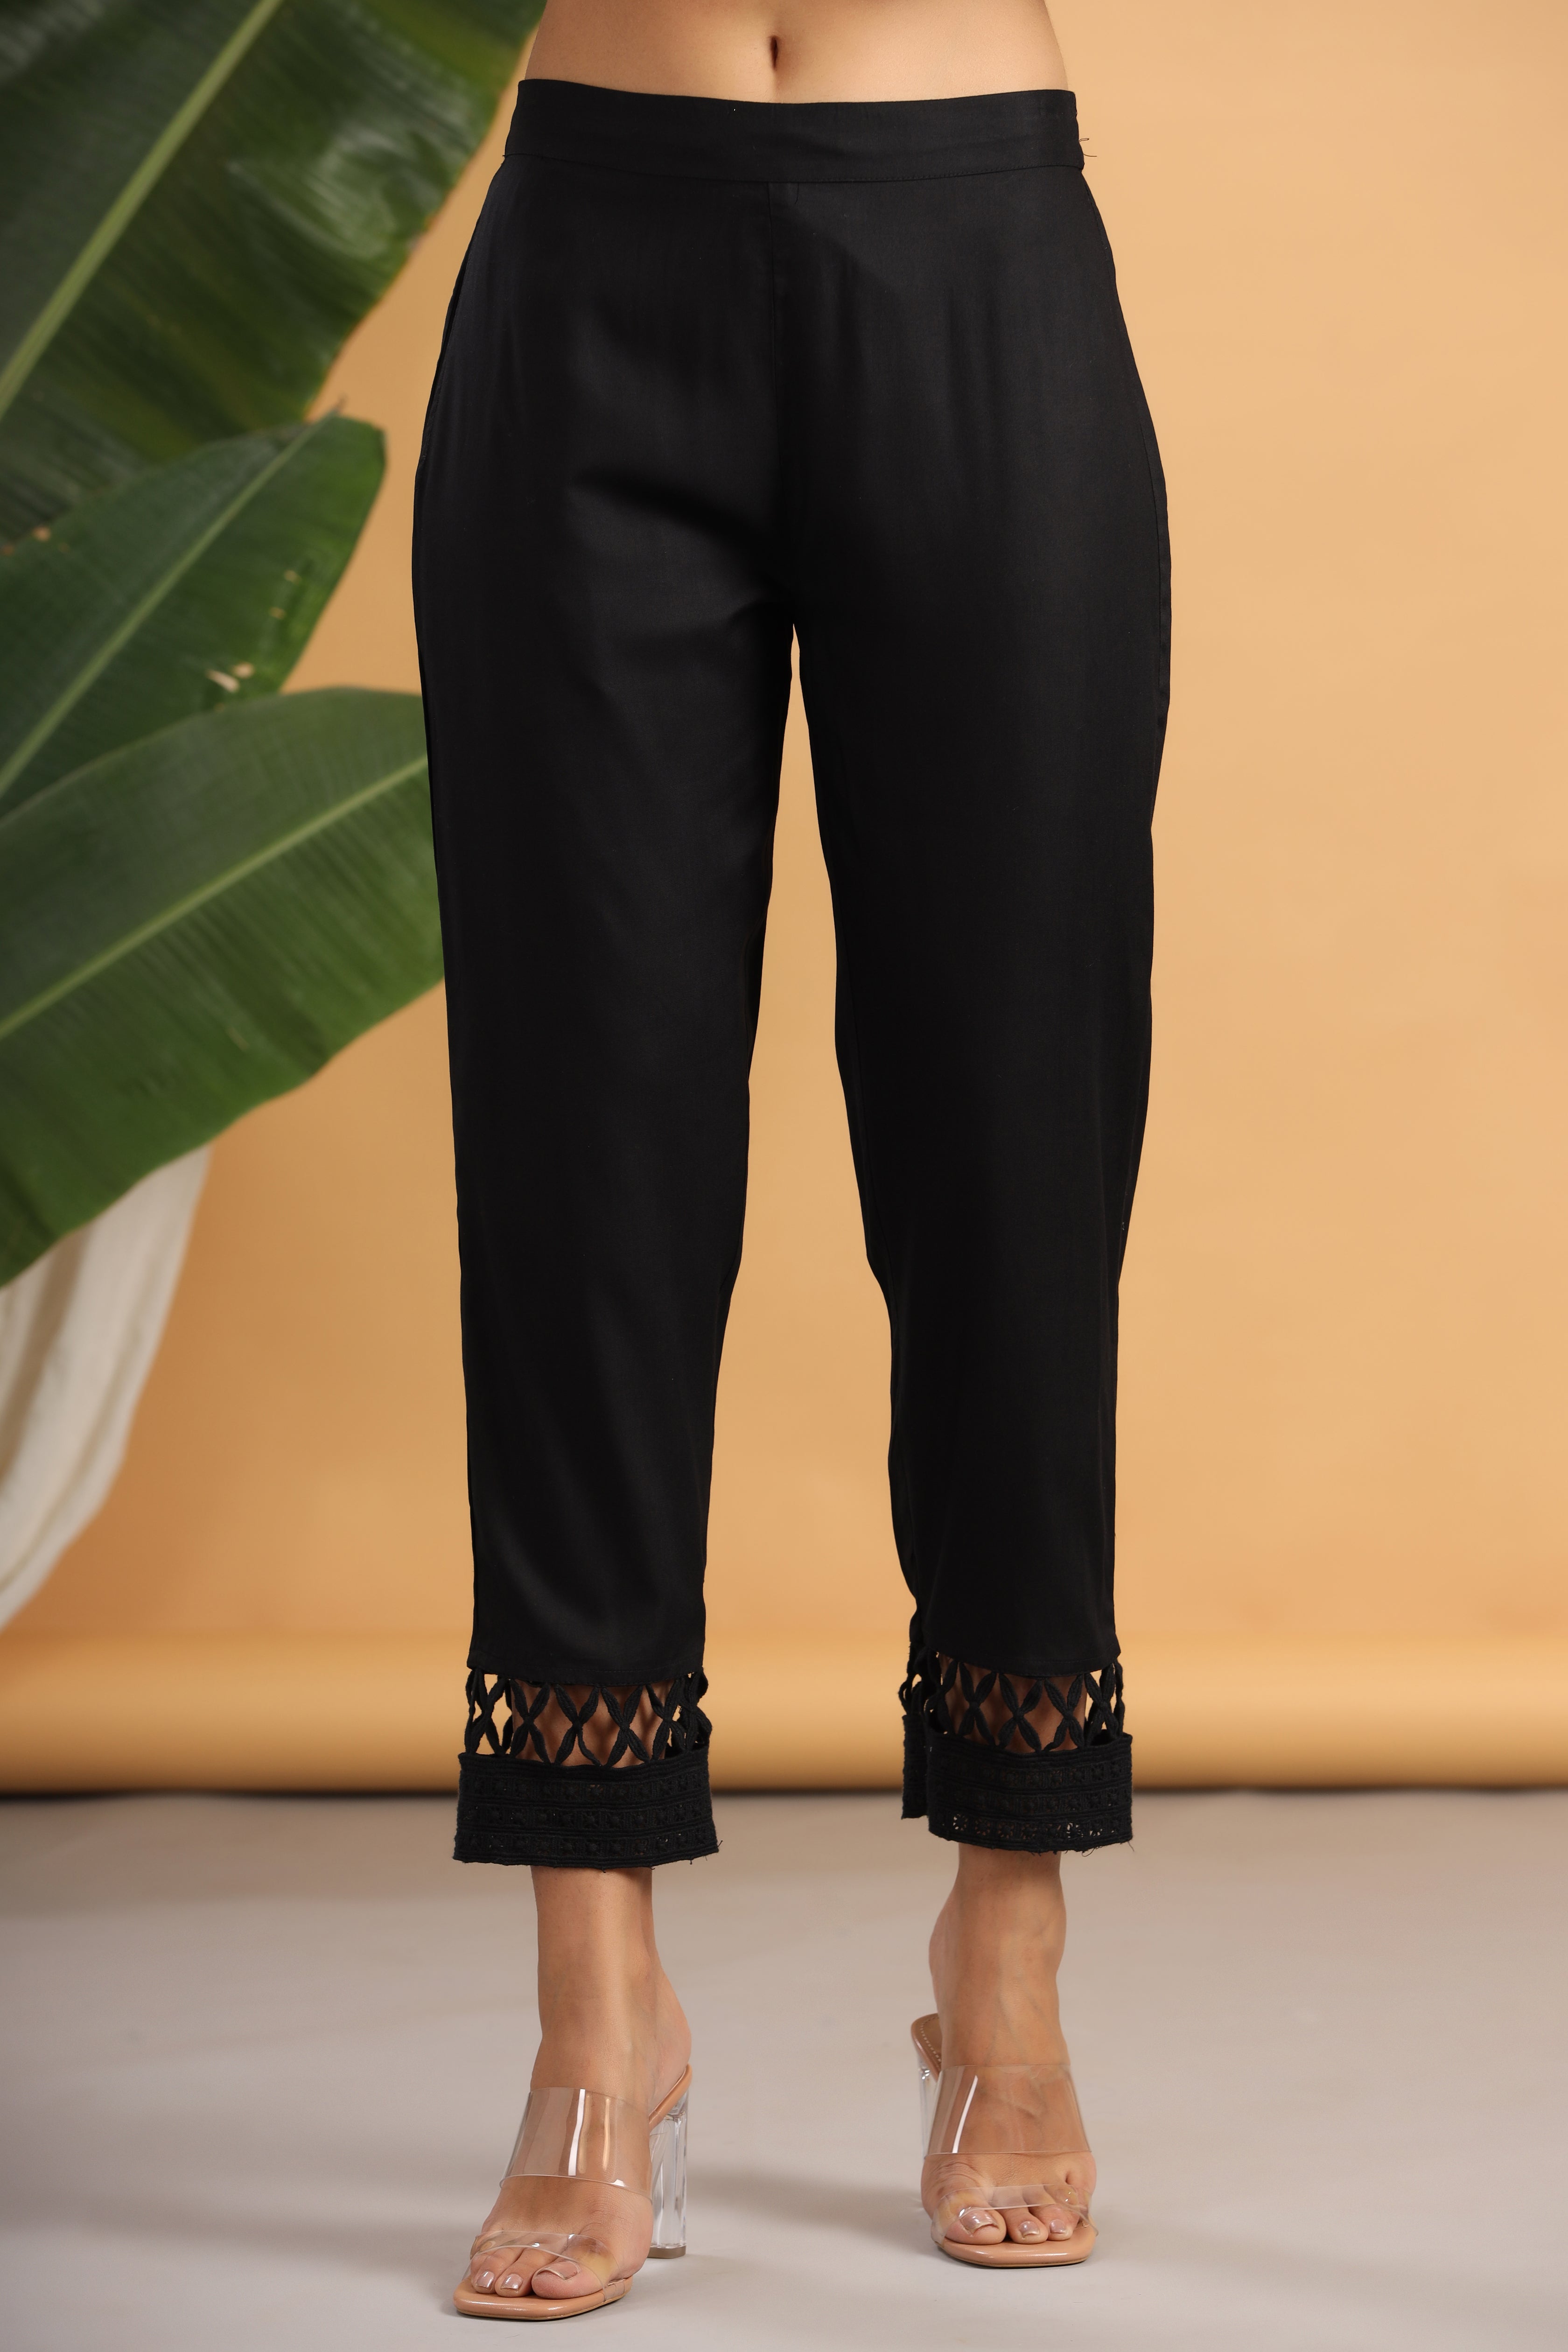 Juniper Black Solid Rayon Ankle-Length Slim Fit Pants.